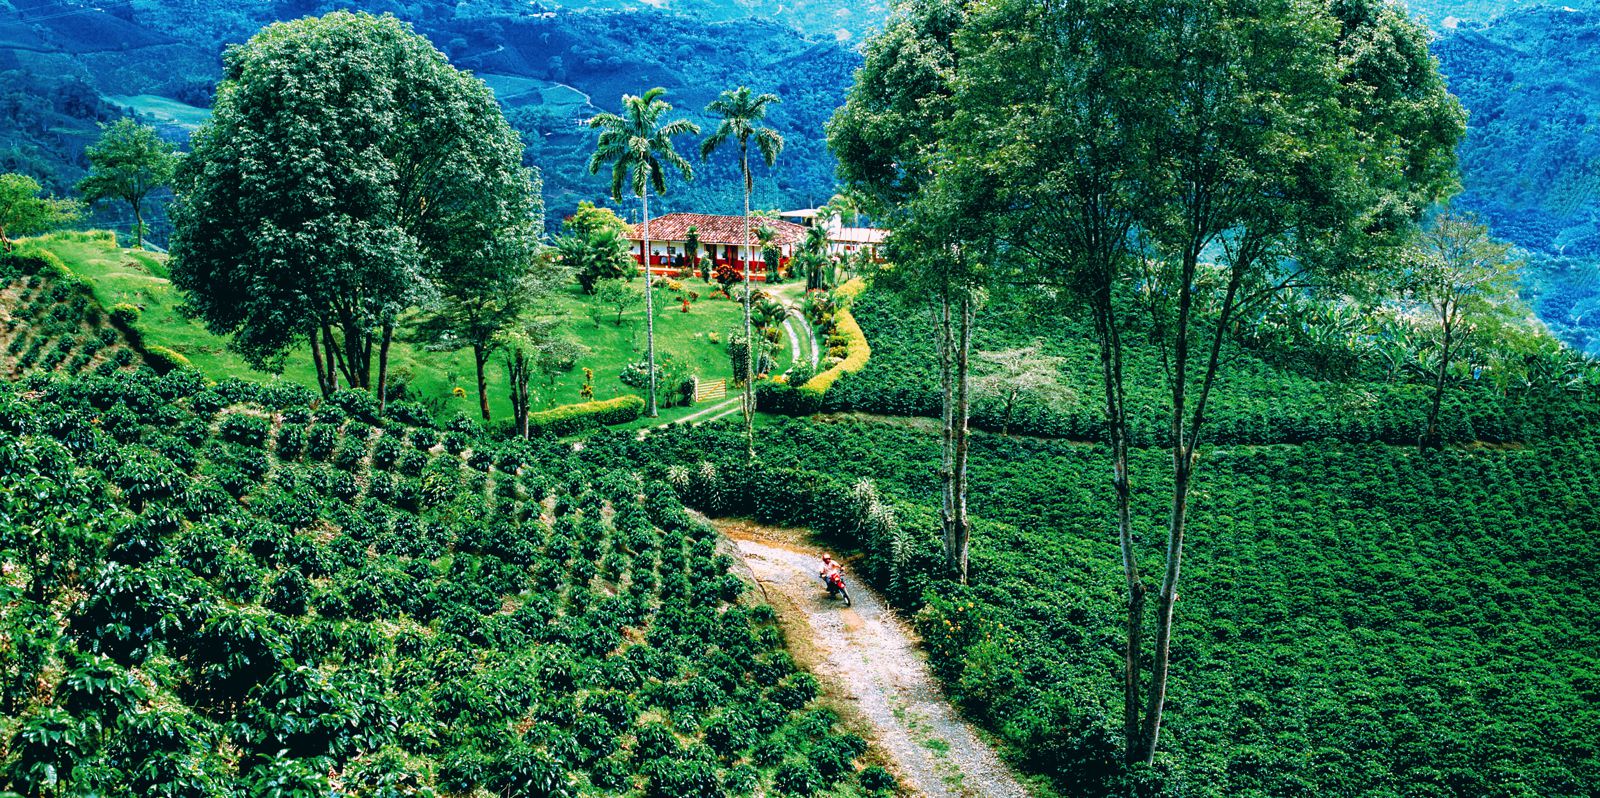 visit coffee plantation colombia